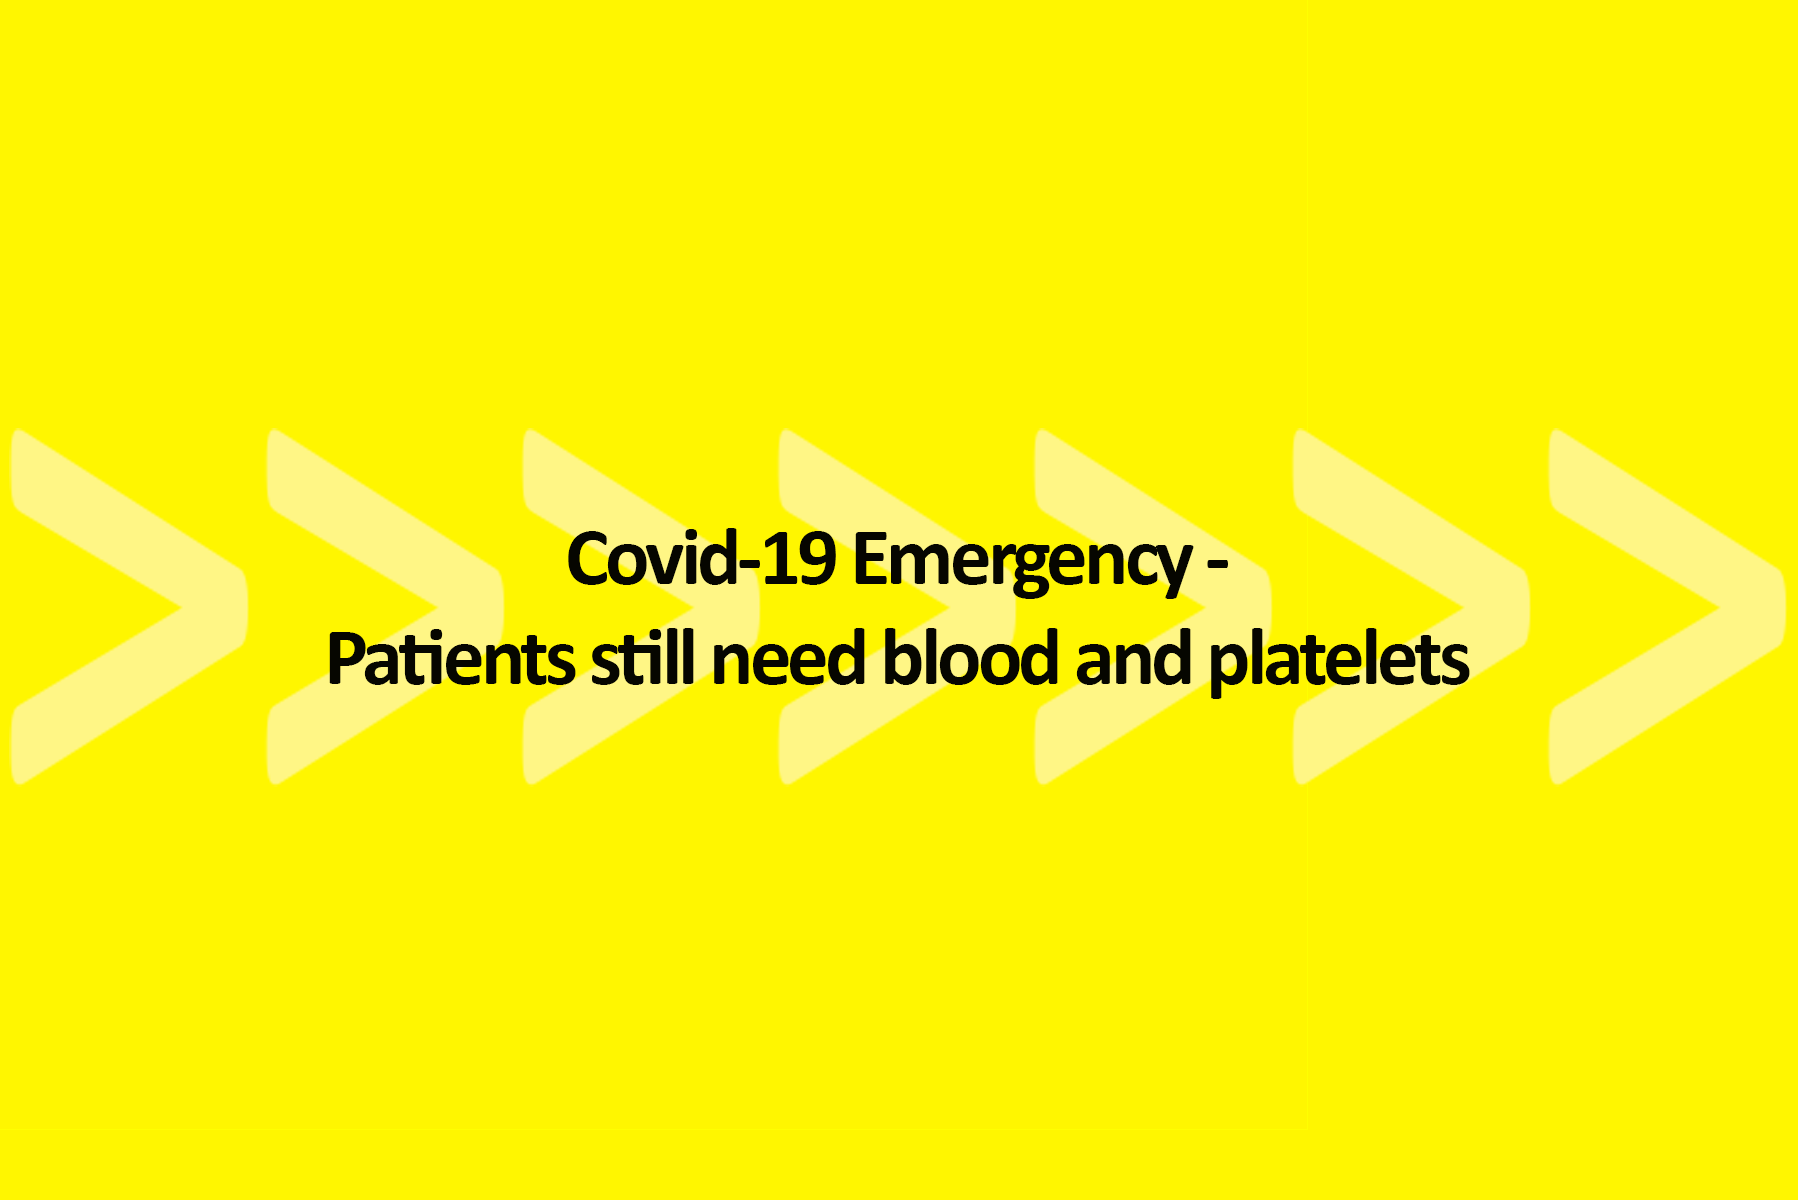 Covid-19 / Coronavirus summary image